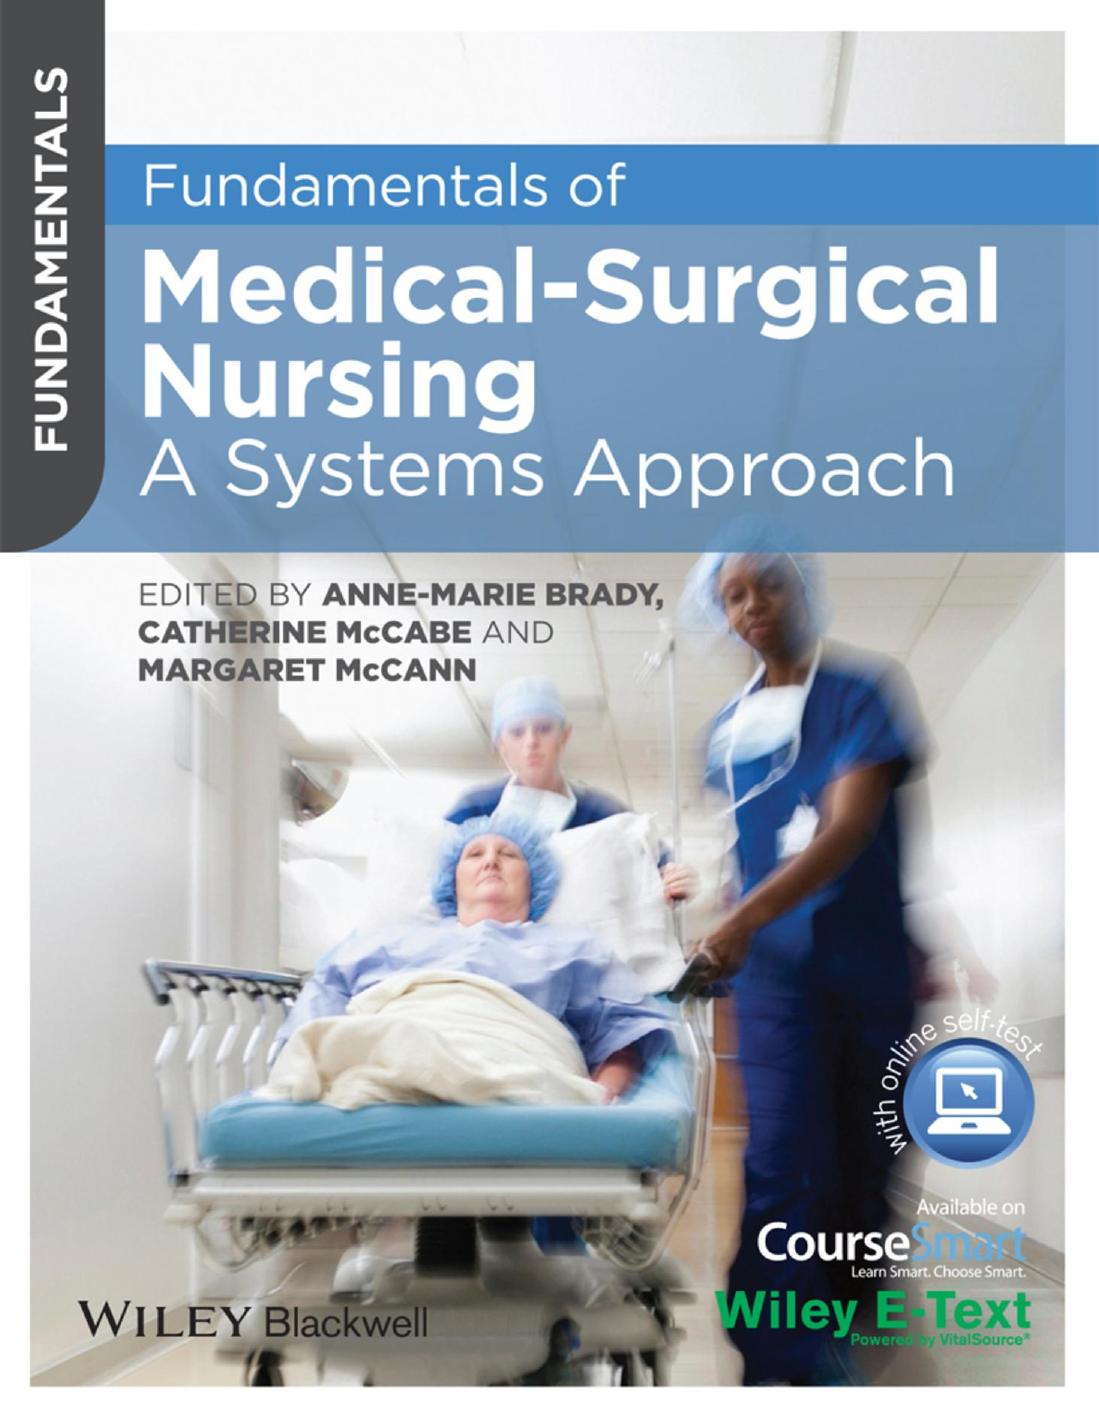 thesis on medical surgical nursing